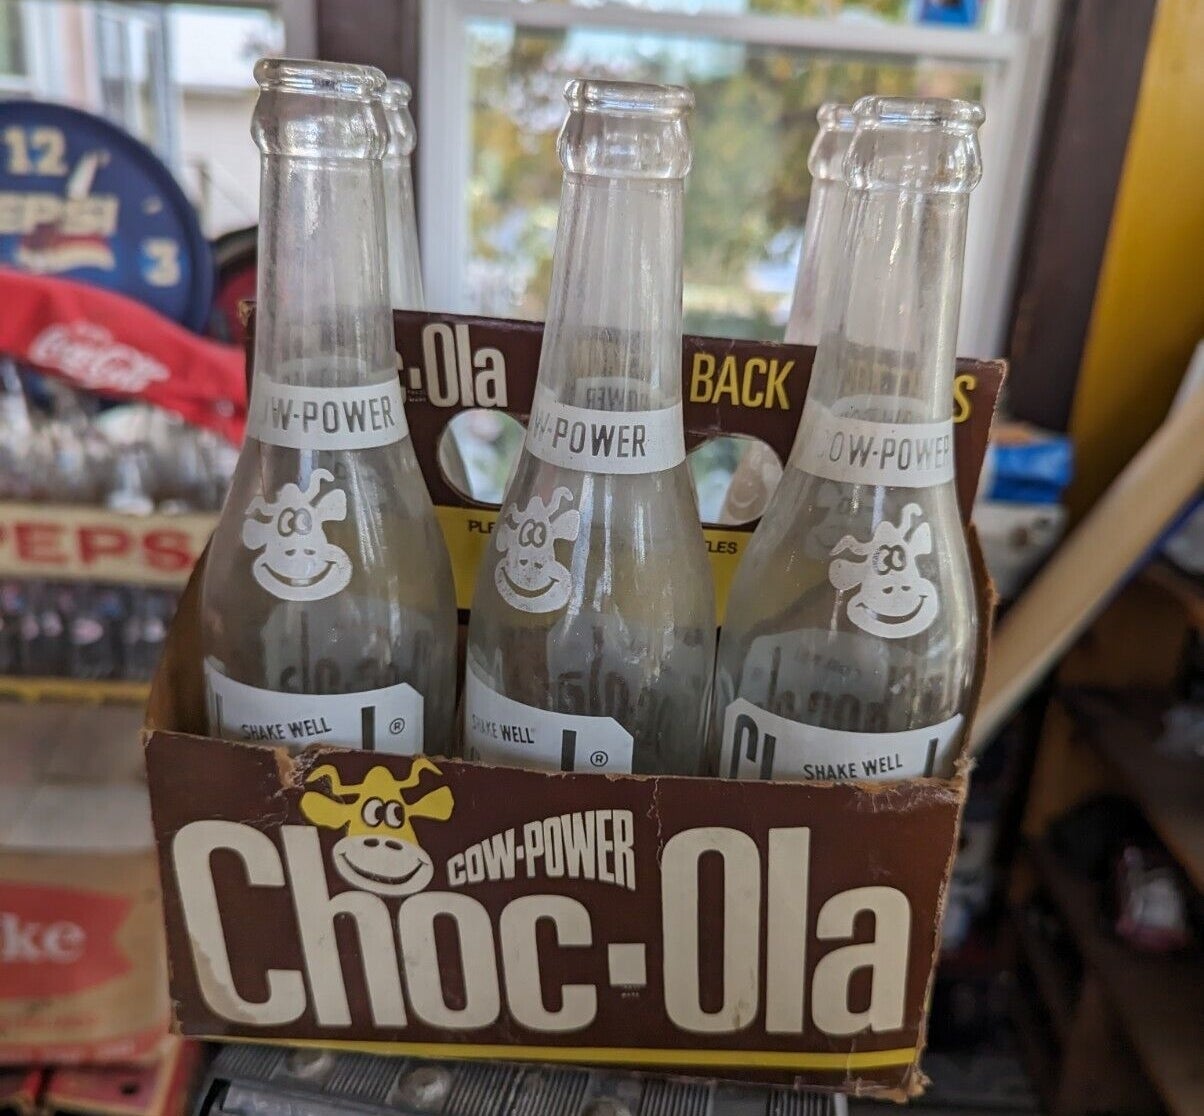 Choc-Ola bottles